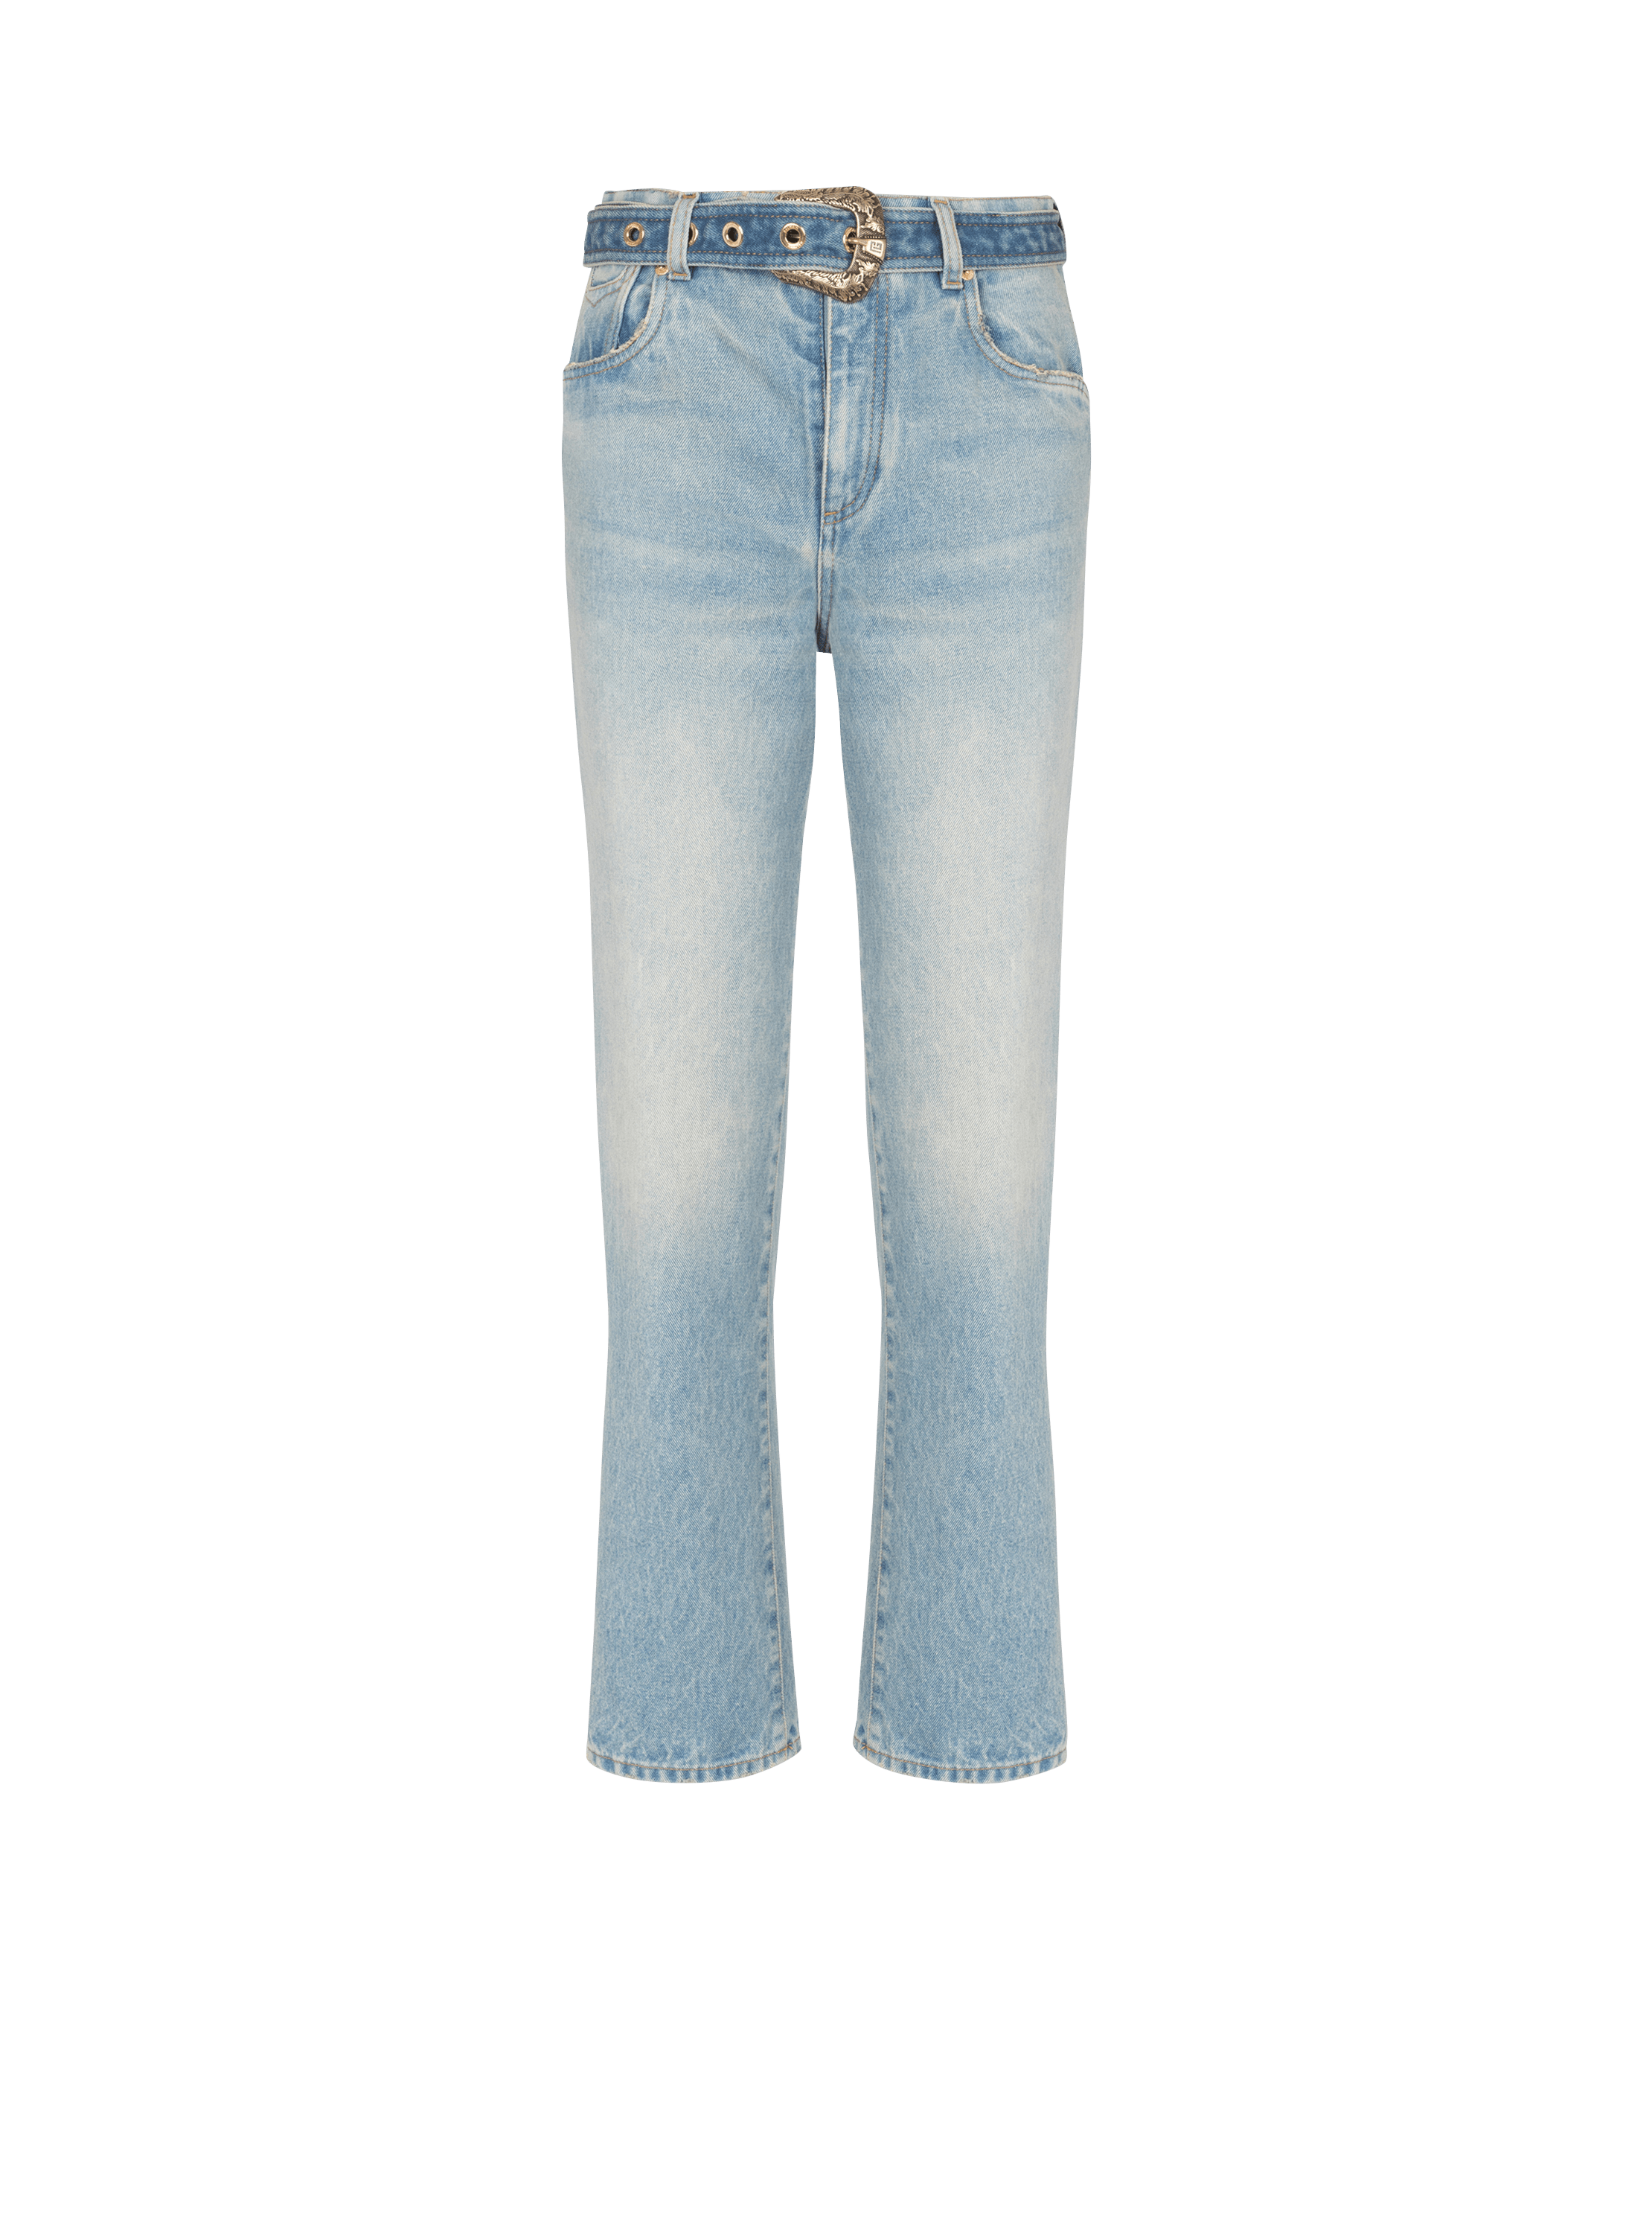 Klassische Jeans mit Gürtel, blau, hi-res